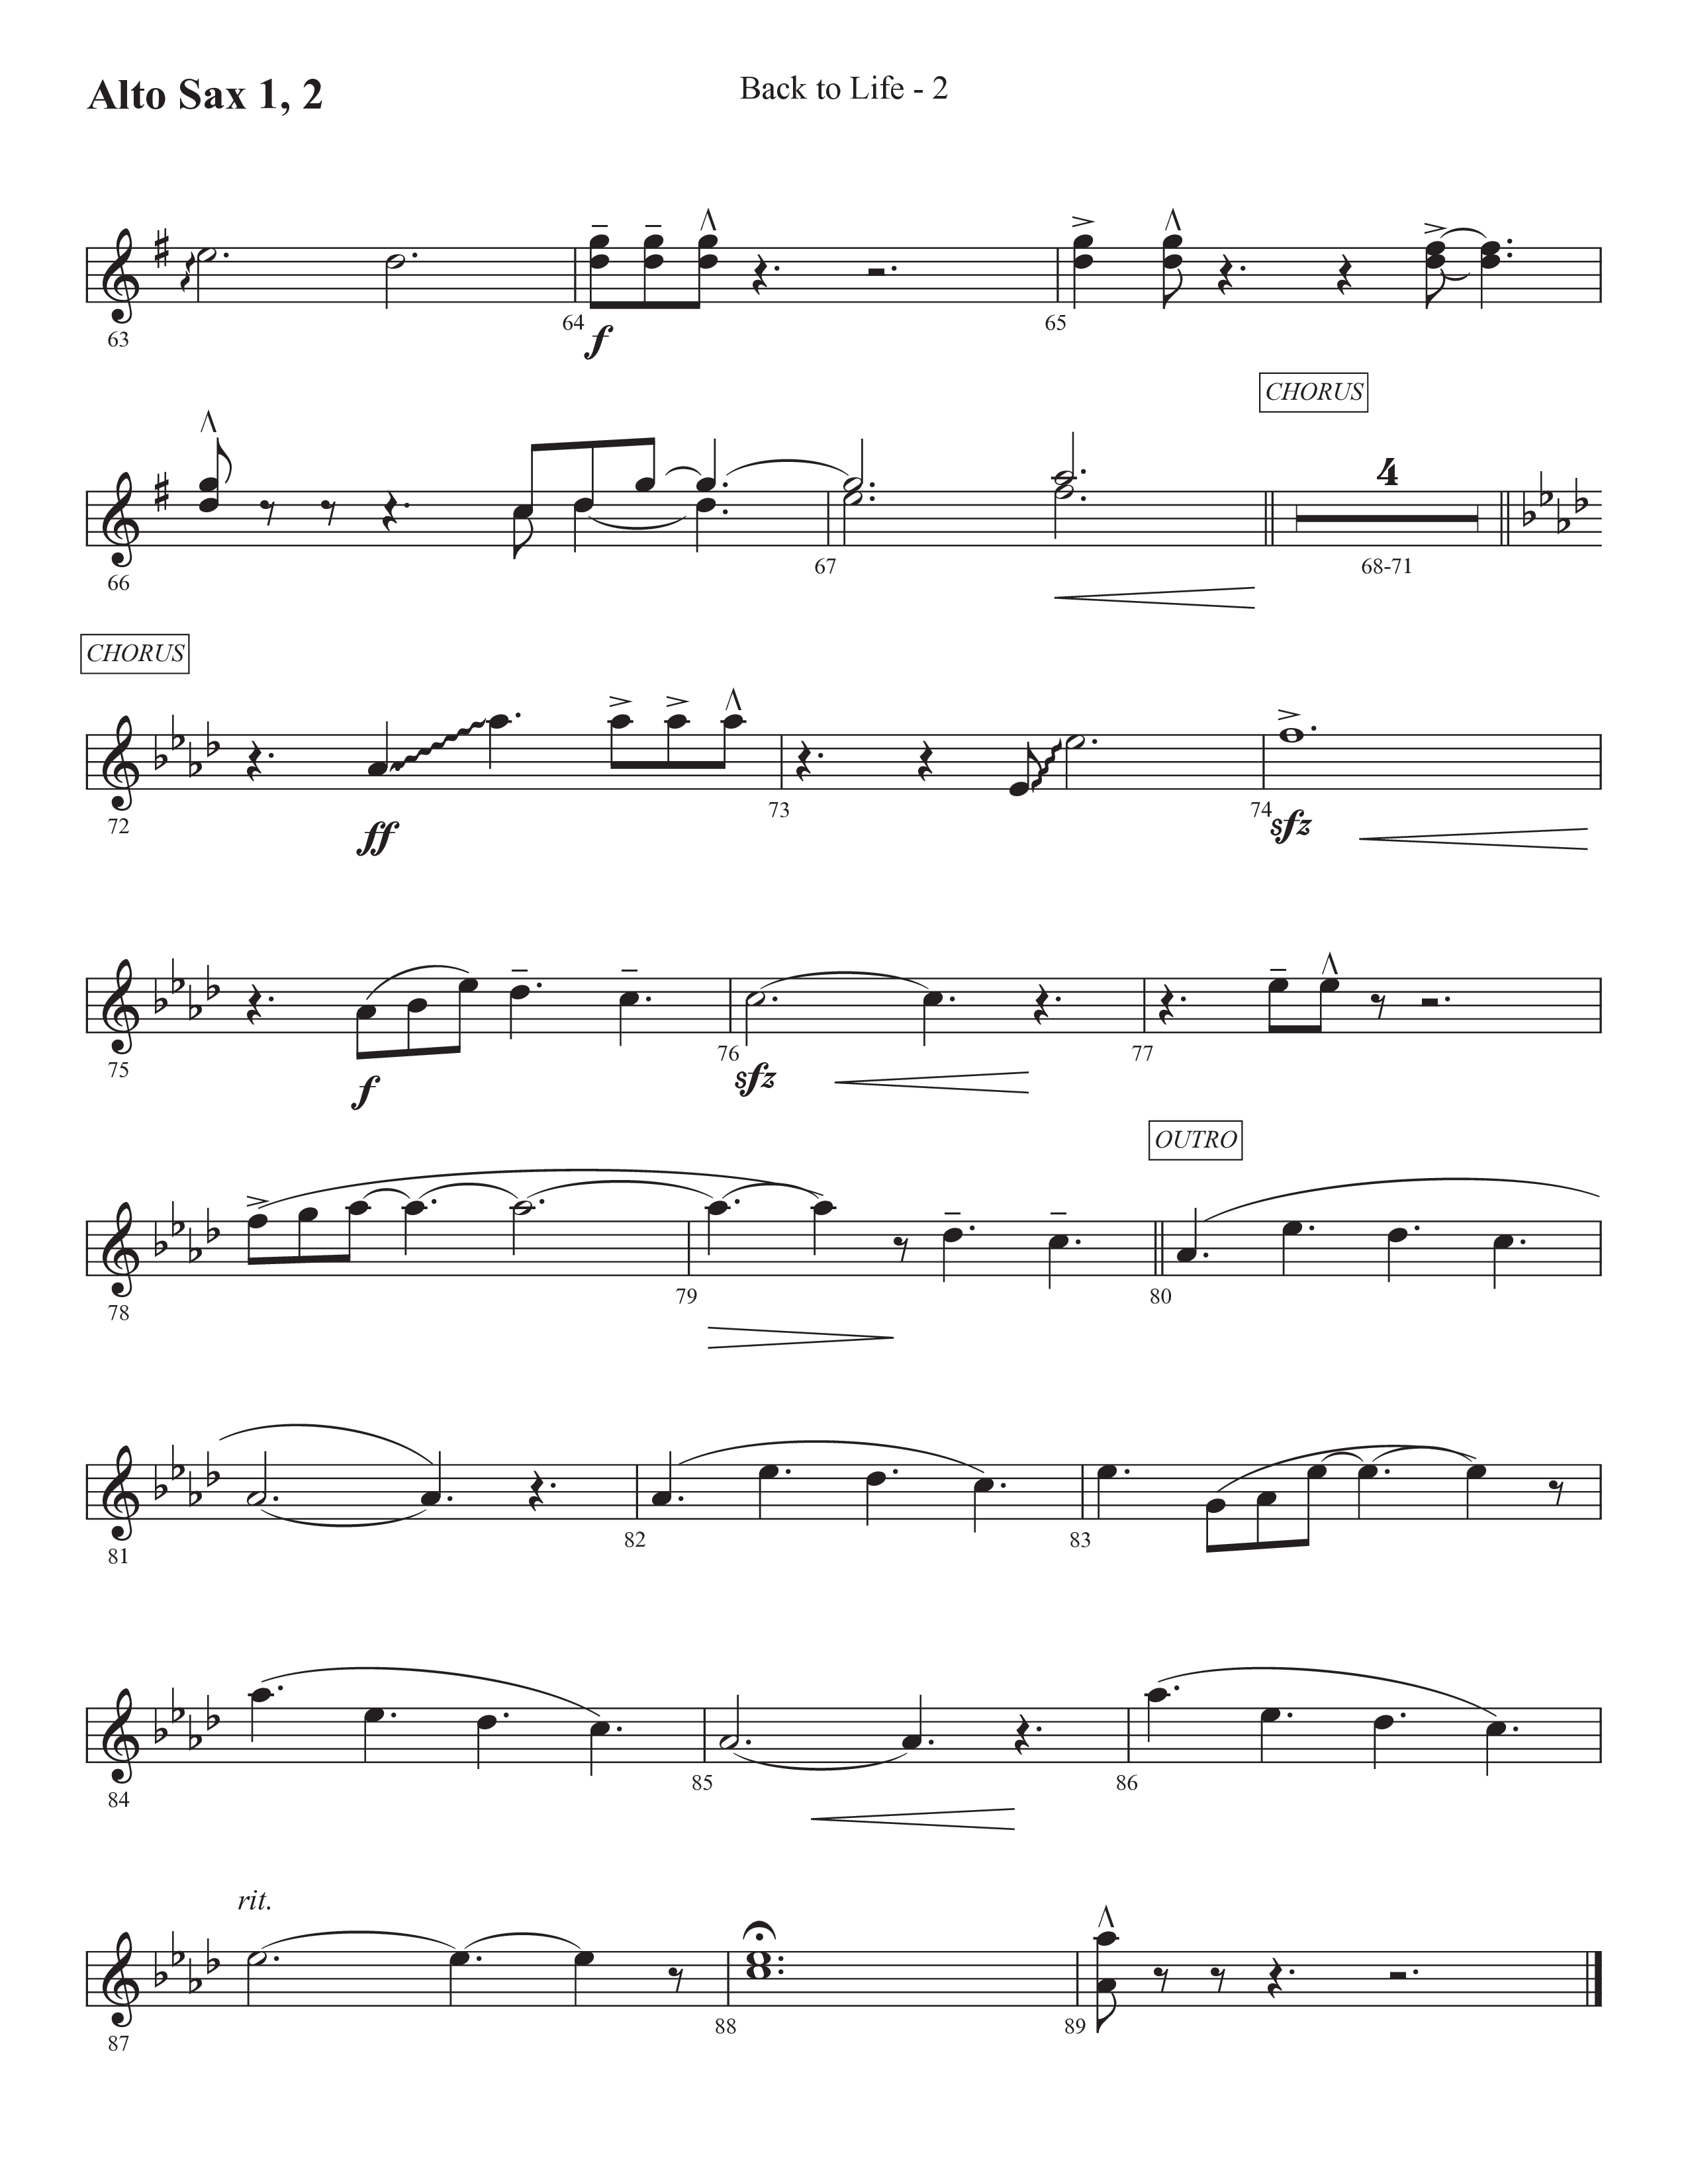 Back To Life (Choral Anthem SATB) Alto Sax 1/2 (Prestonwood Worship / Prestonwood Choir / Arr. Carson Wagner)